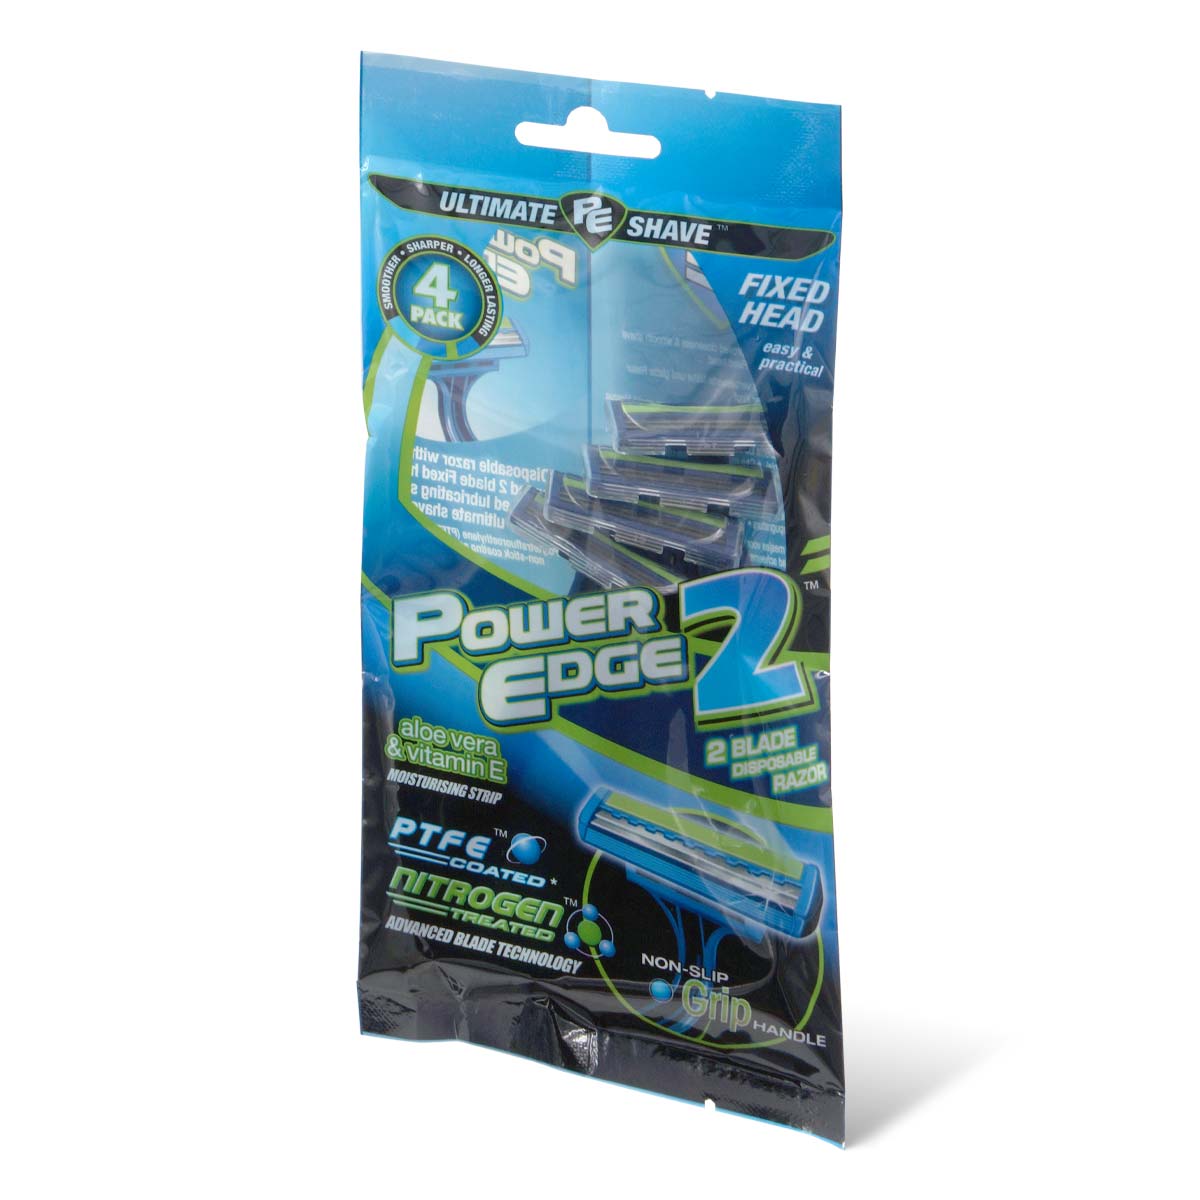 Power Edge 2 Blade Disposable Razor 4's pack-p_1